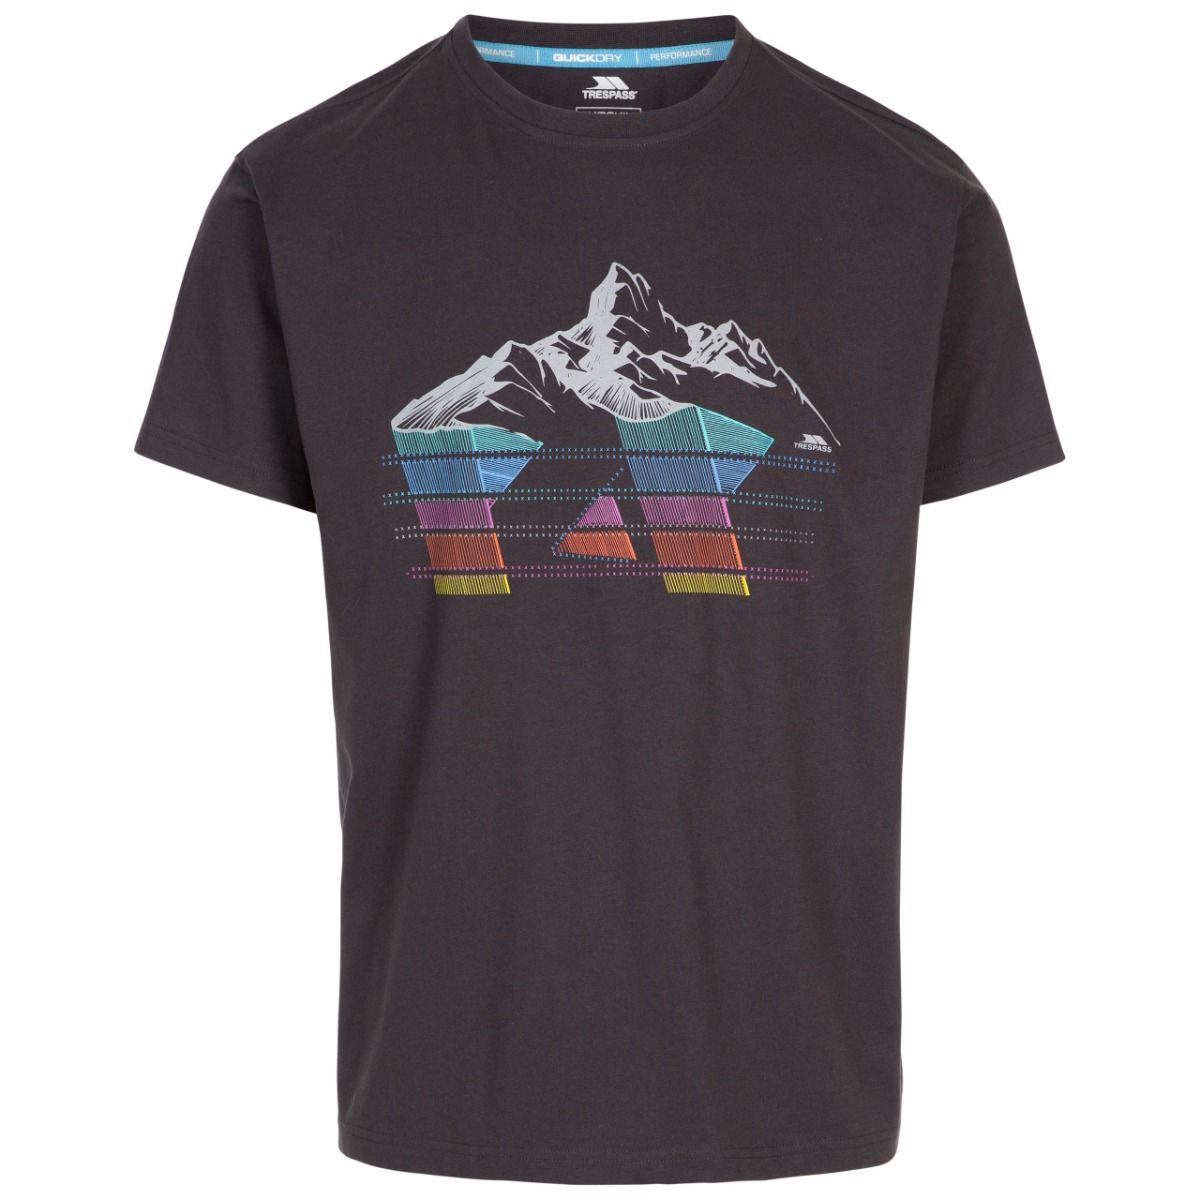 Trespass Mens Casual Short Sleeve Graphic Mountain T-shirt Daytona